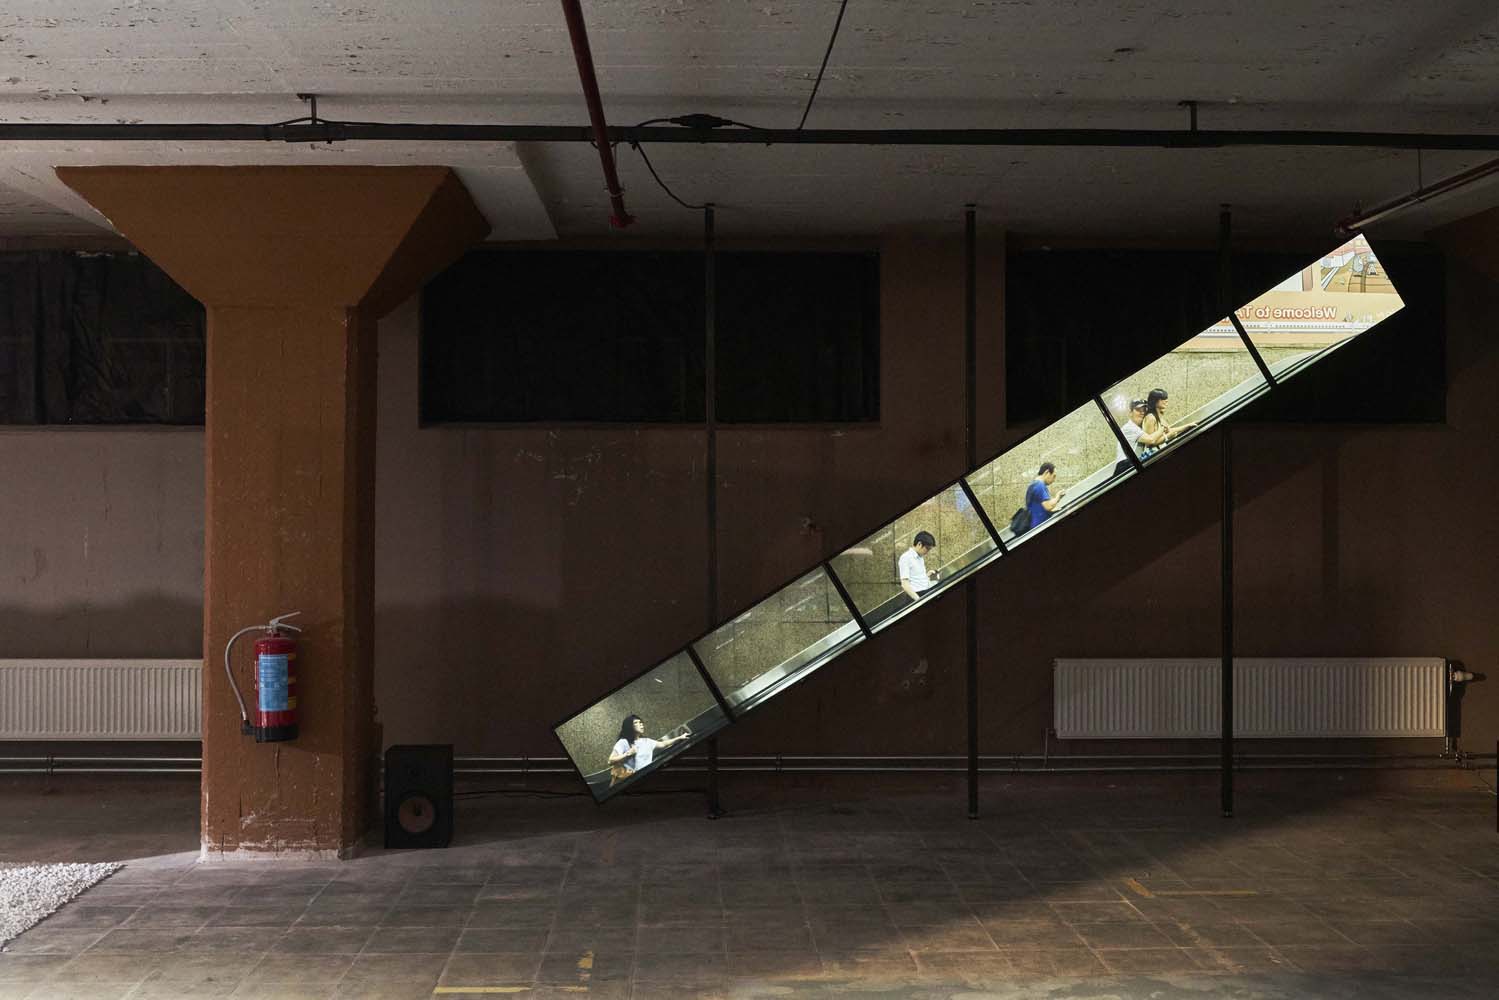 File:Faux plafond isolation acoustique.jpg - Wikipedia